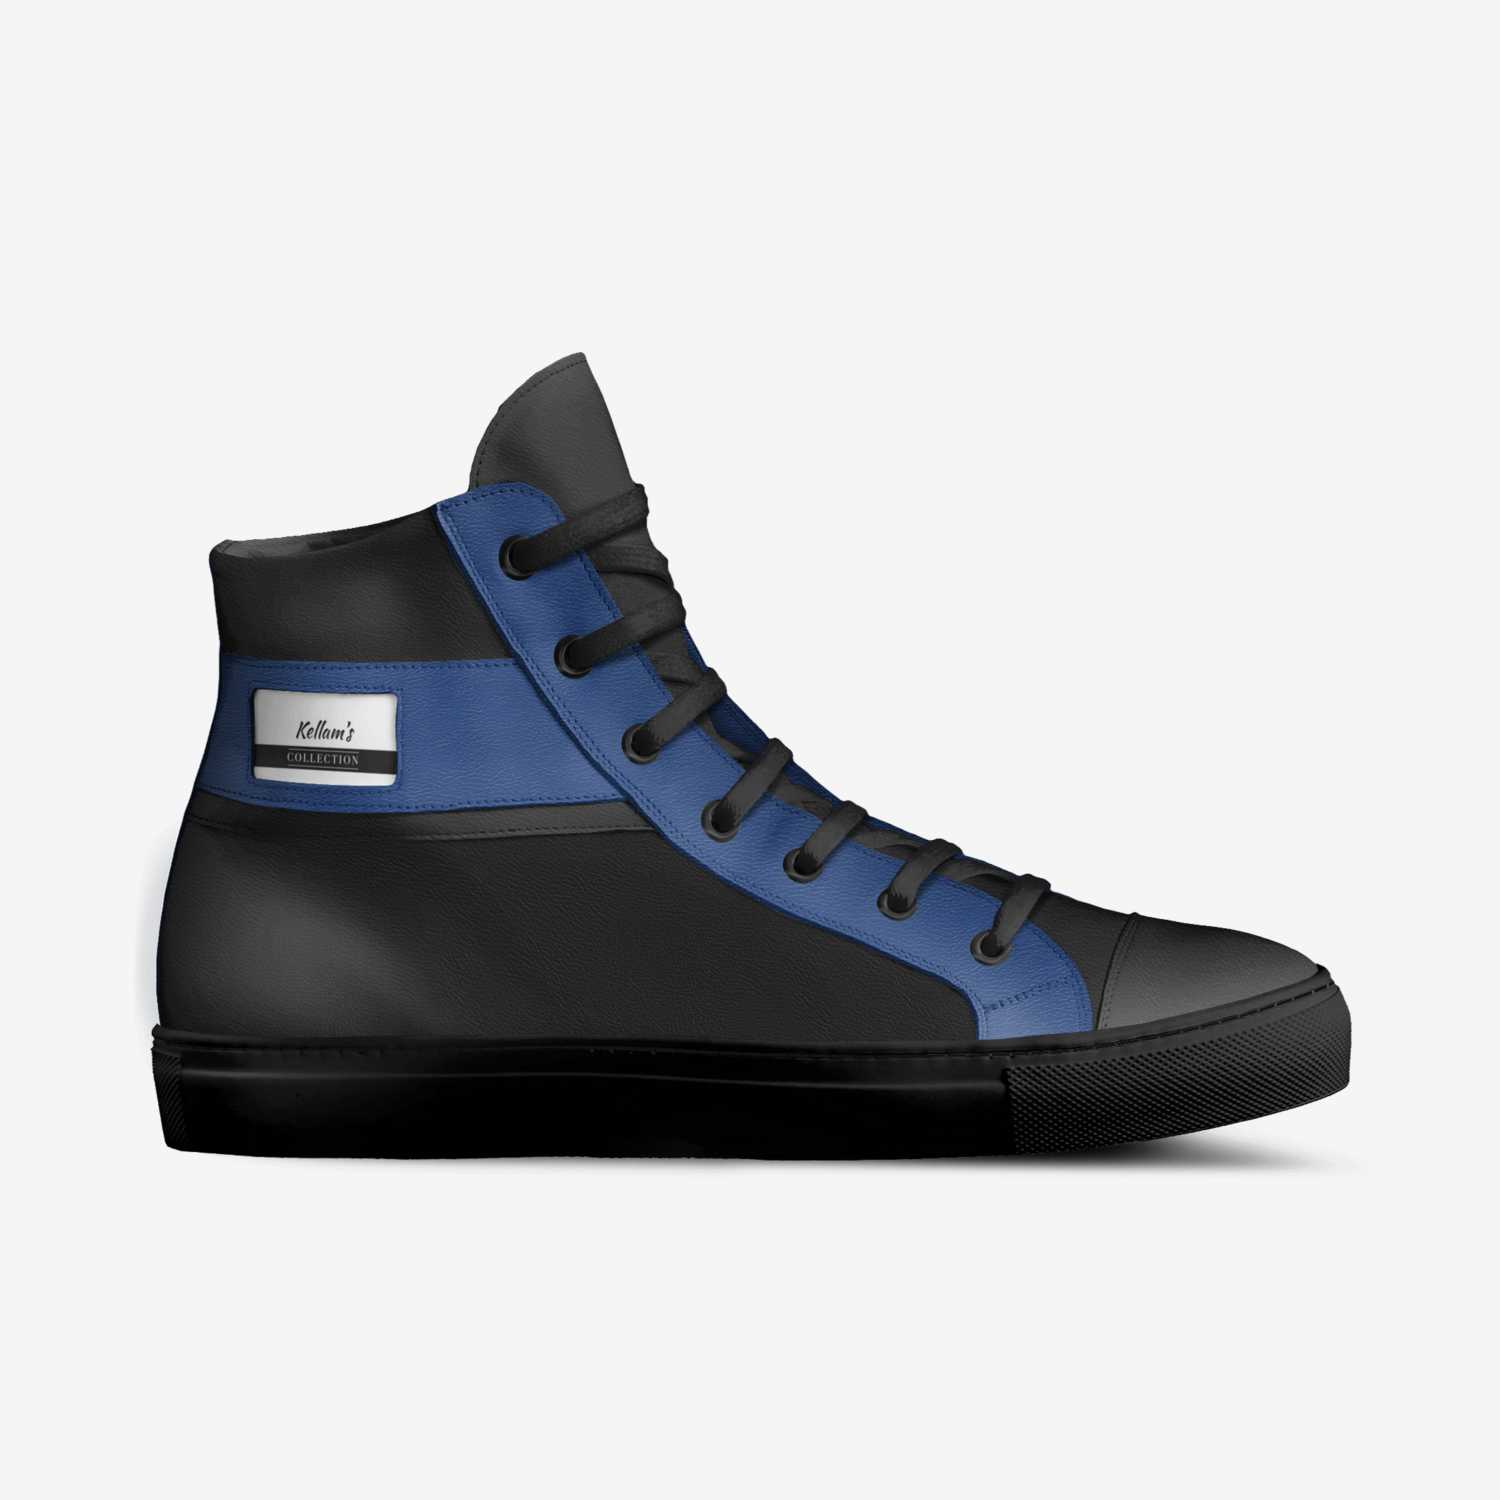 iSmoke custom made in Italy shoes by Aj Kellam | Side view